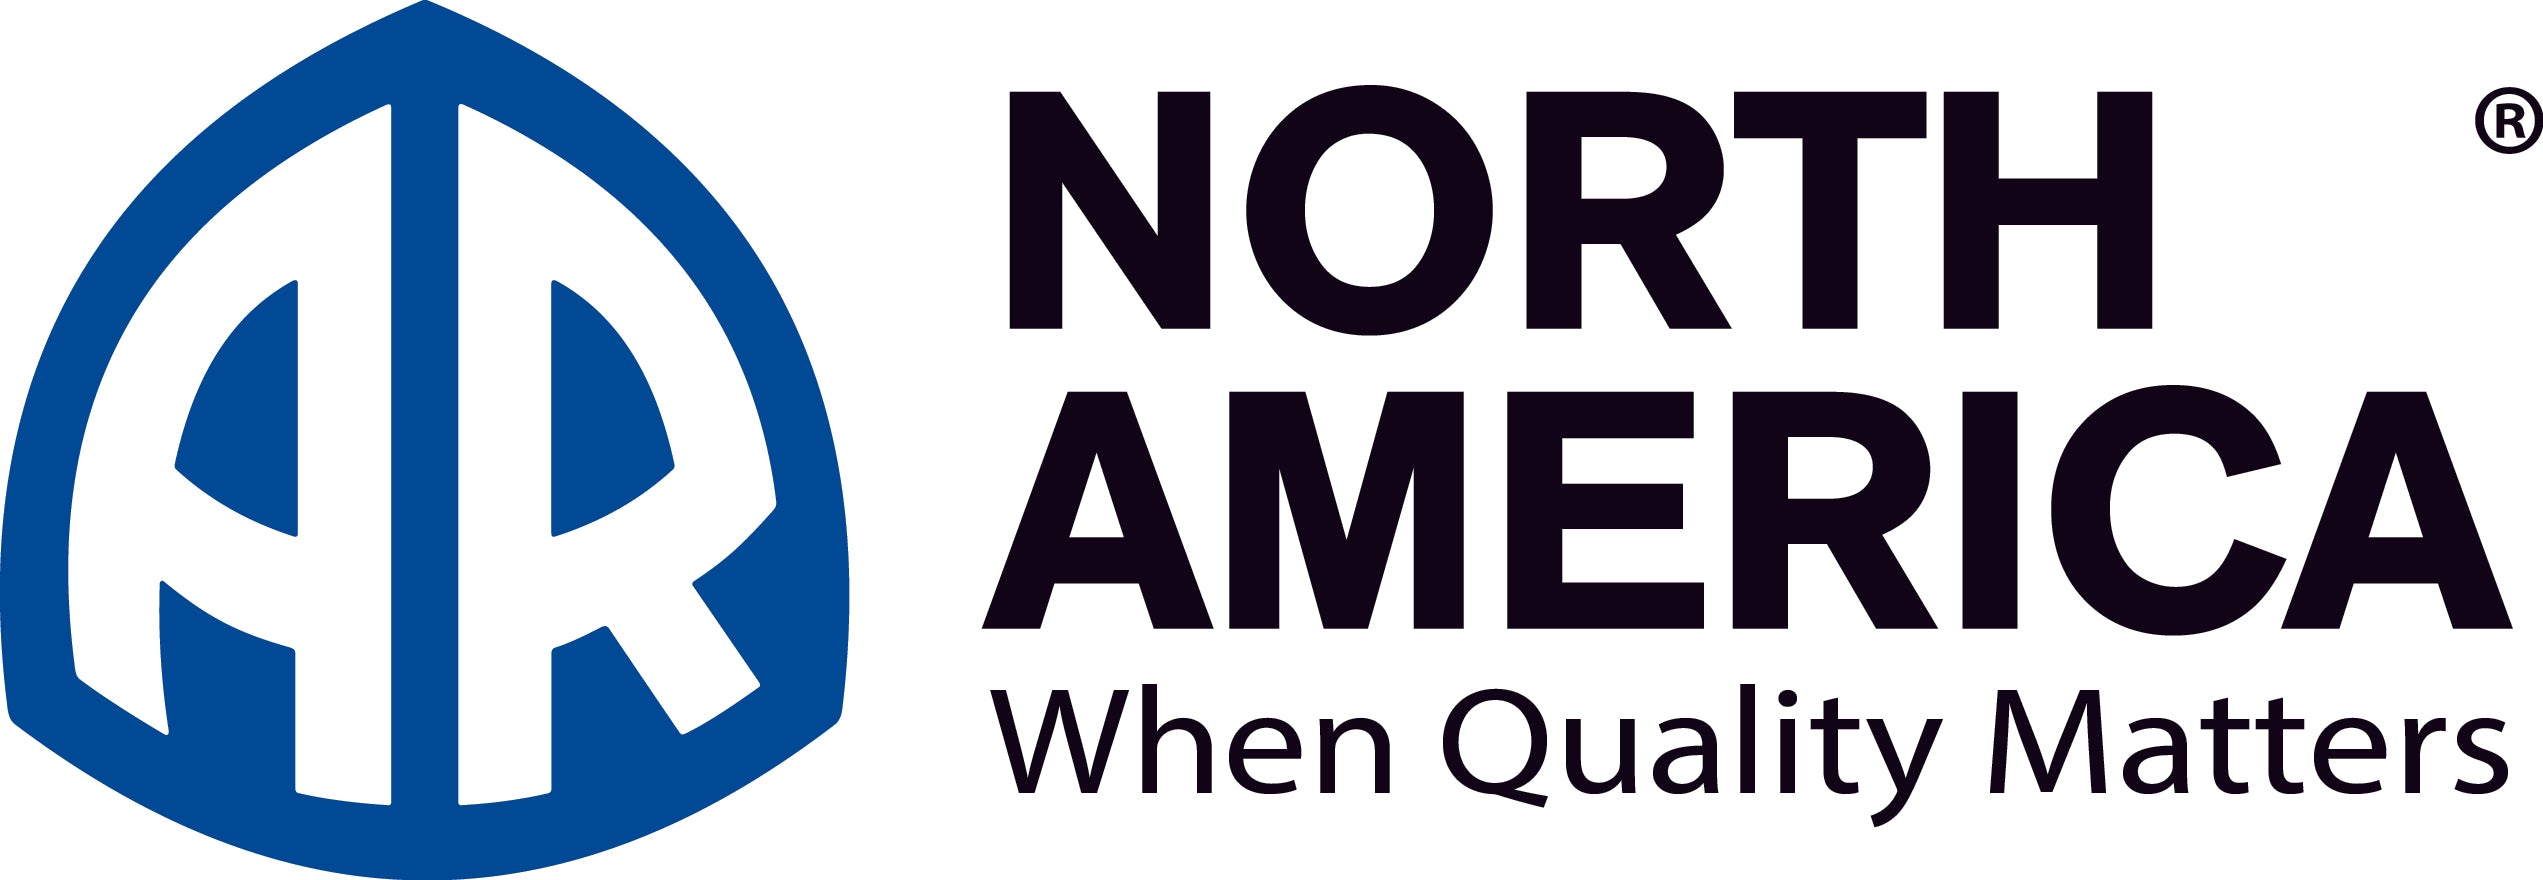 AR North America